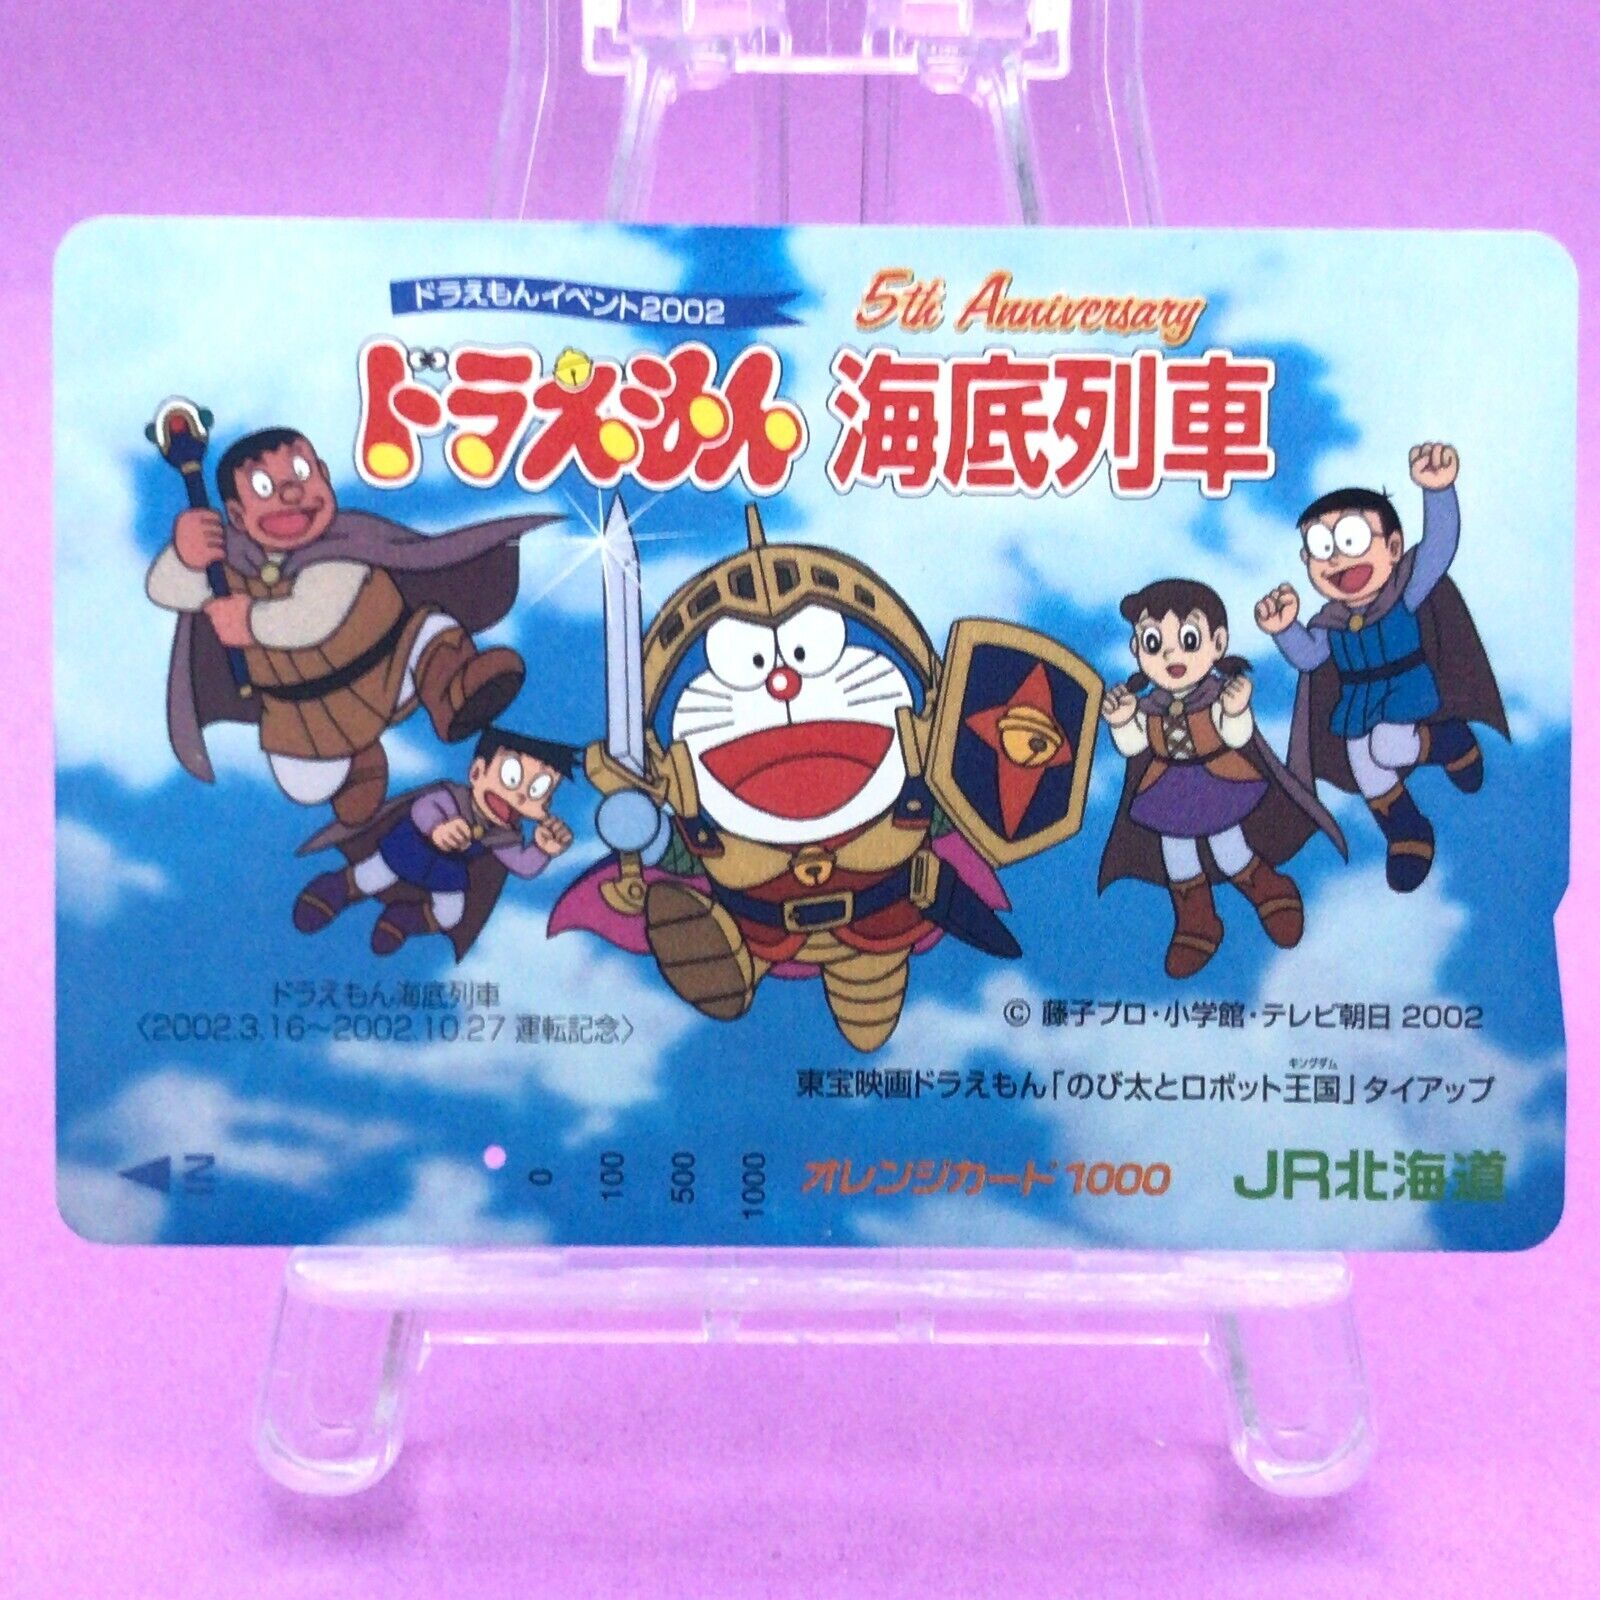 Doraemon Movie Undersea Train 5th anniversary 2002 Orange Card Promo Japan Anime